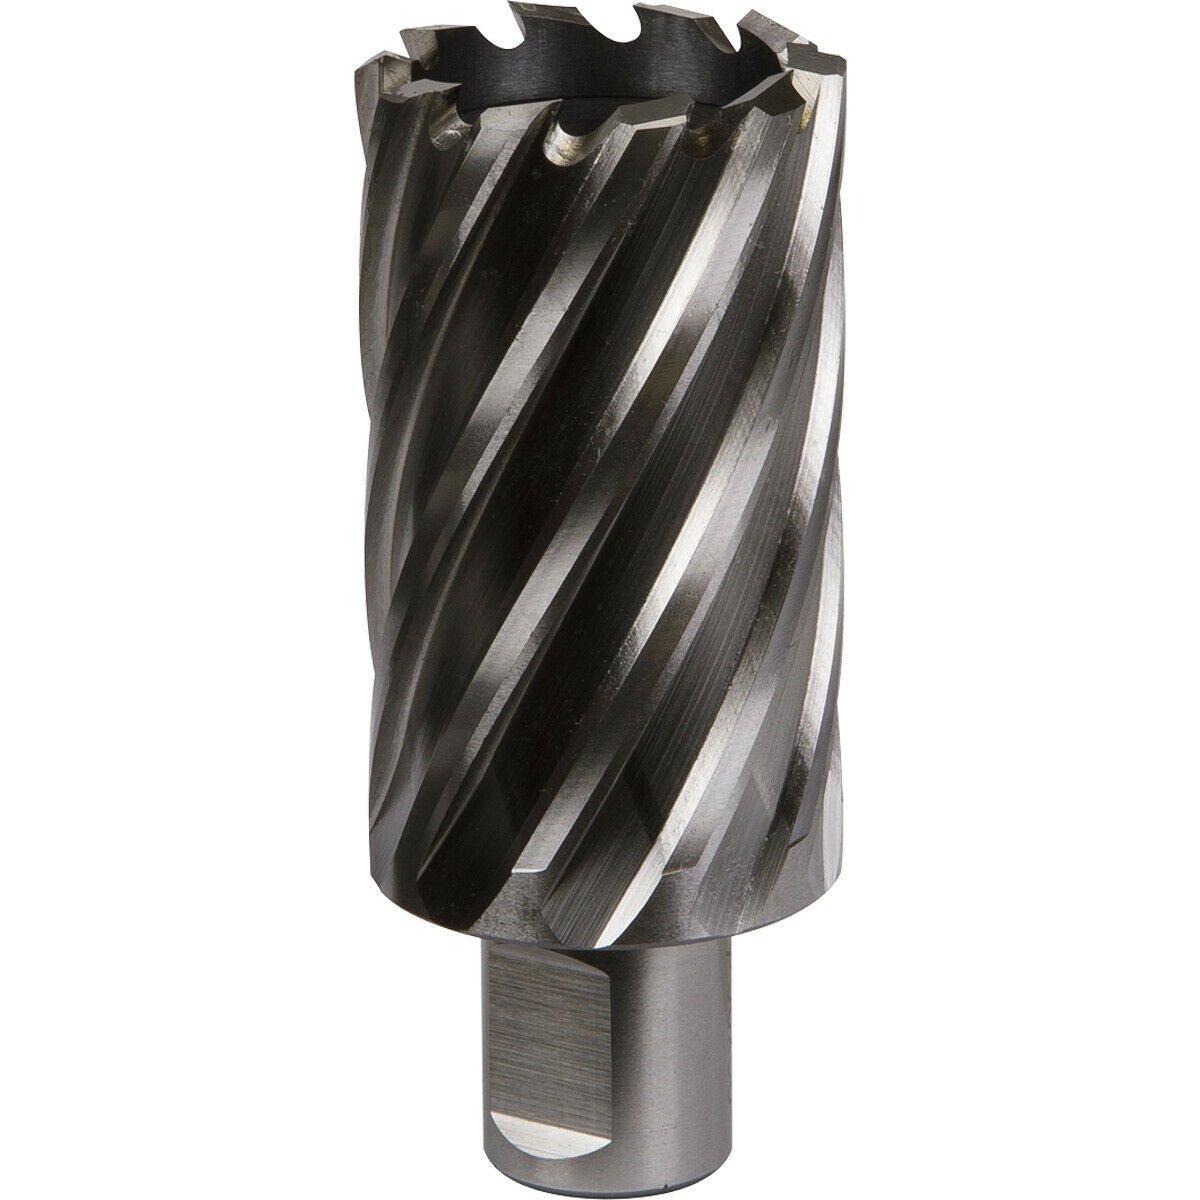 36mm x 50mm Depth Rotabor Cutter - M2 Steel Annular Metal Core Drill 19mm Shank